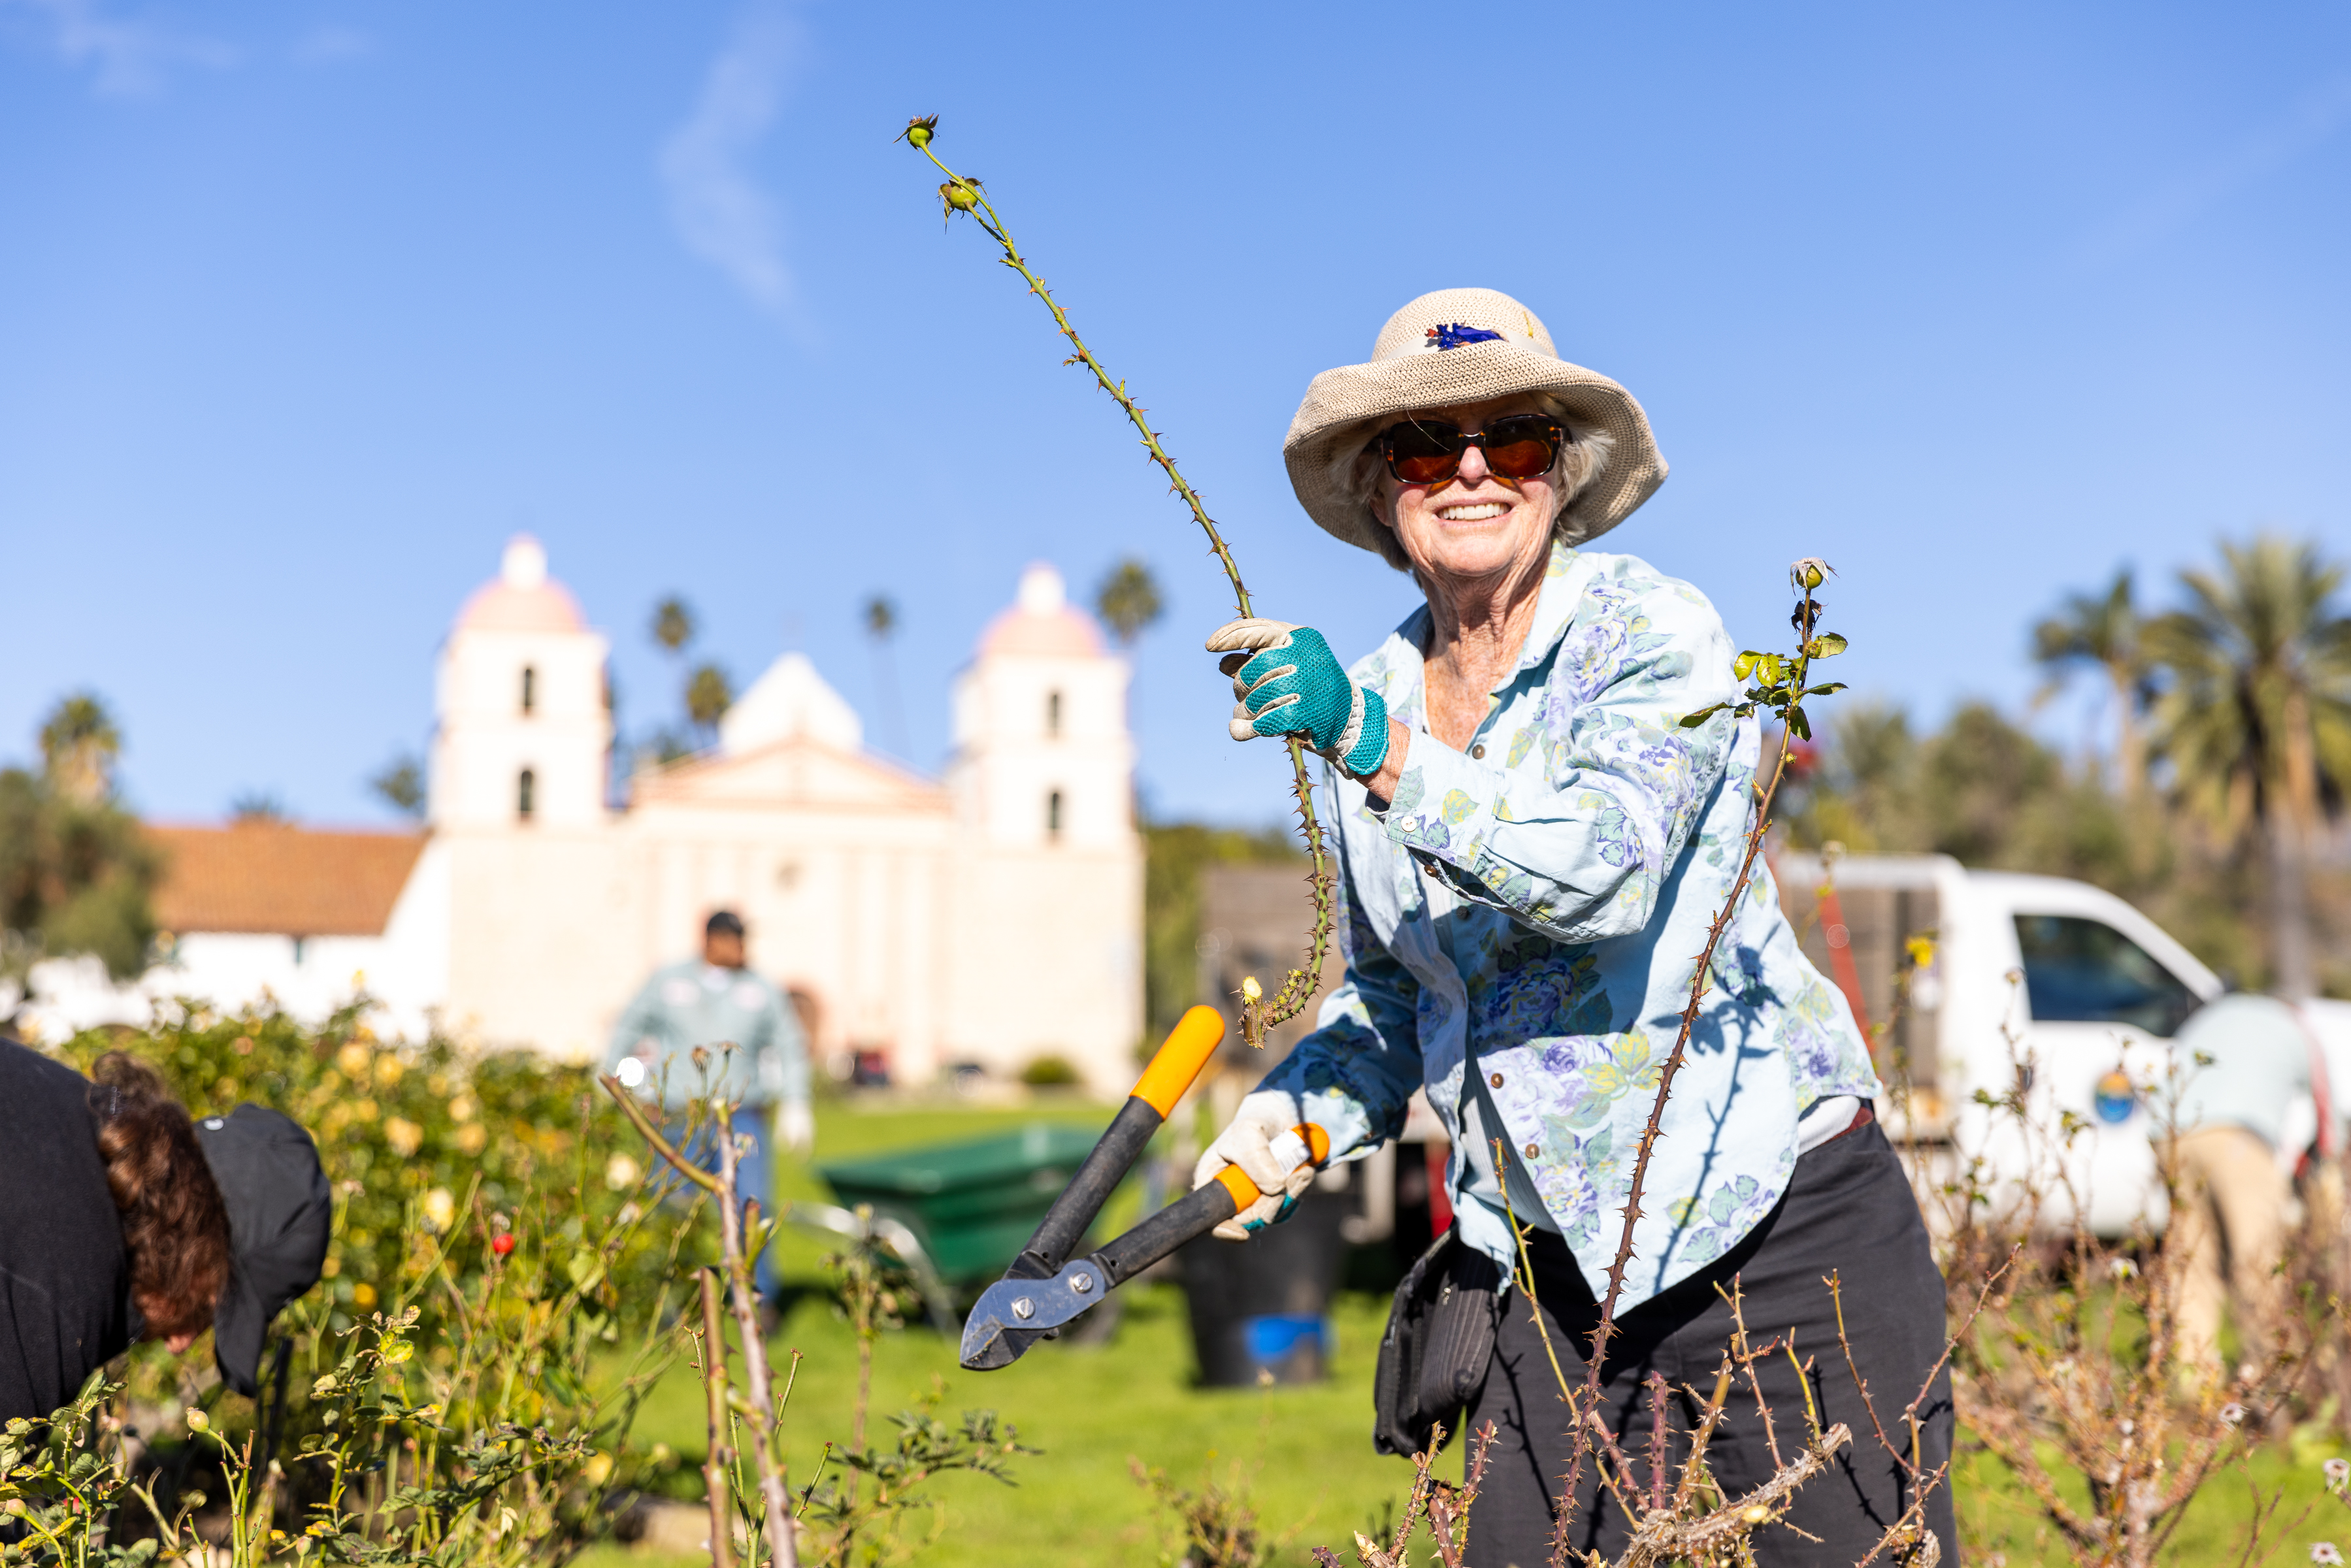 A volunteer prunes a rose bush